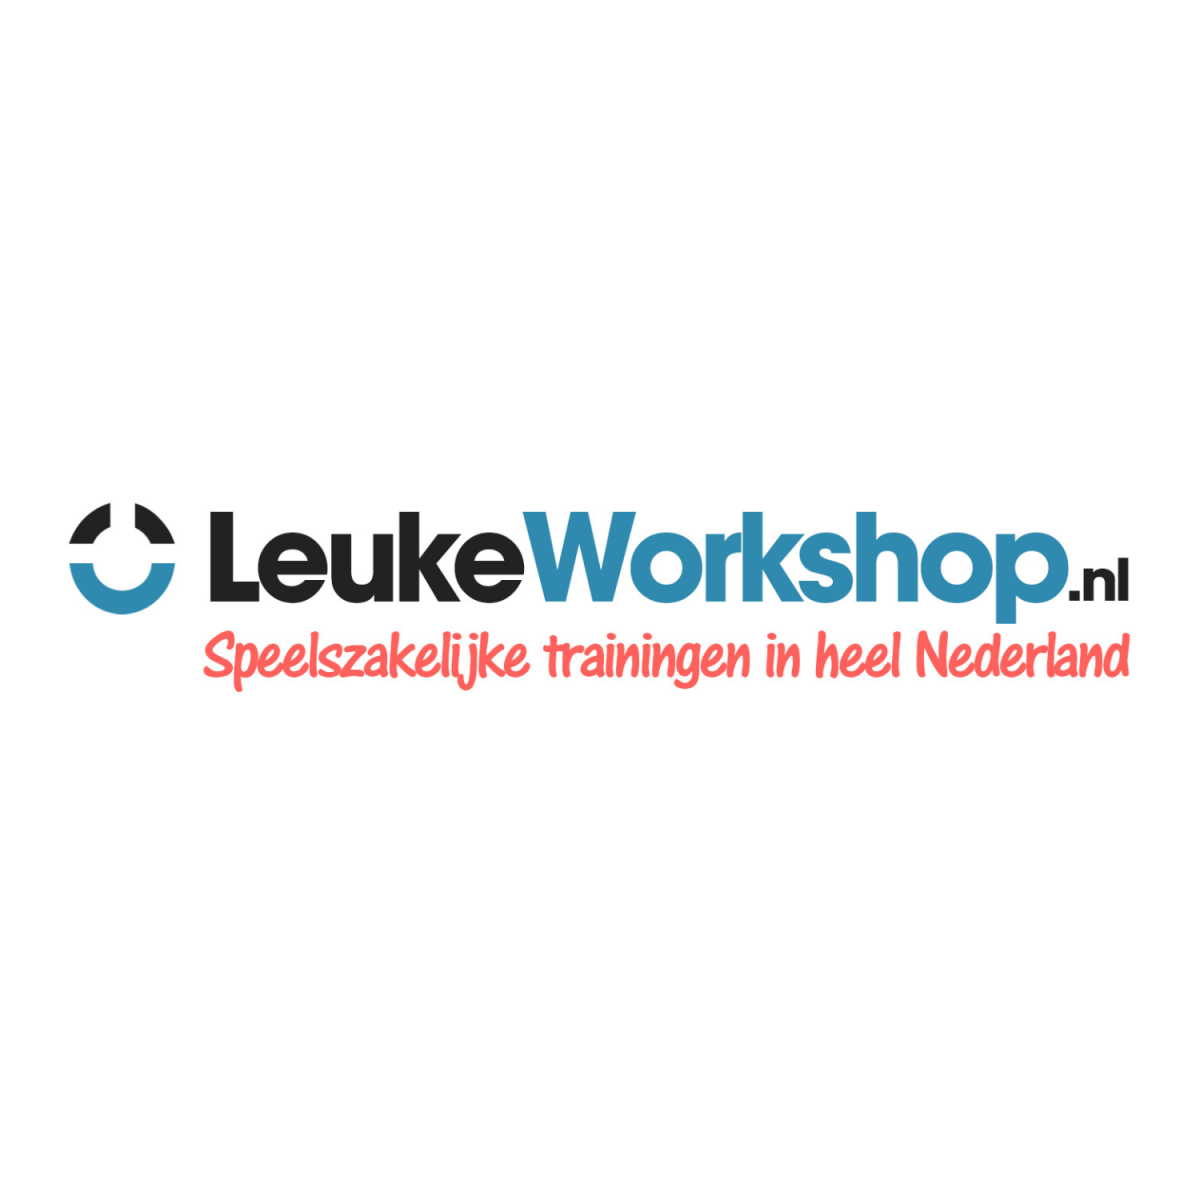 Leukeworkshop.nl